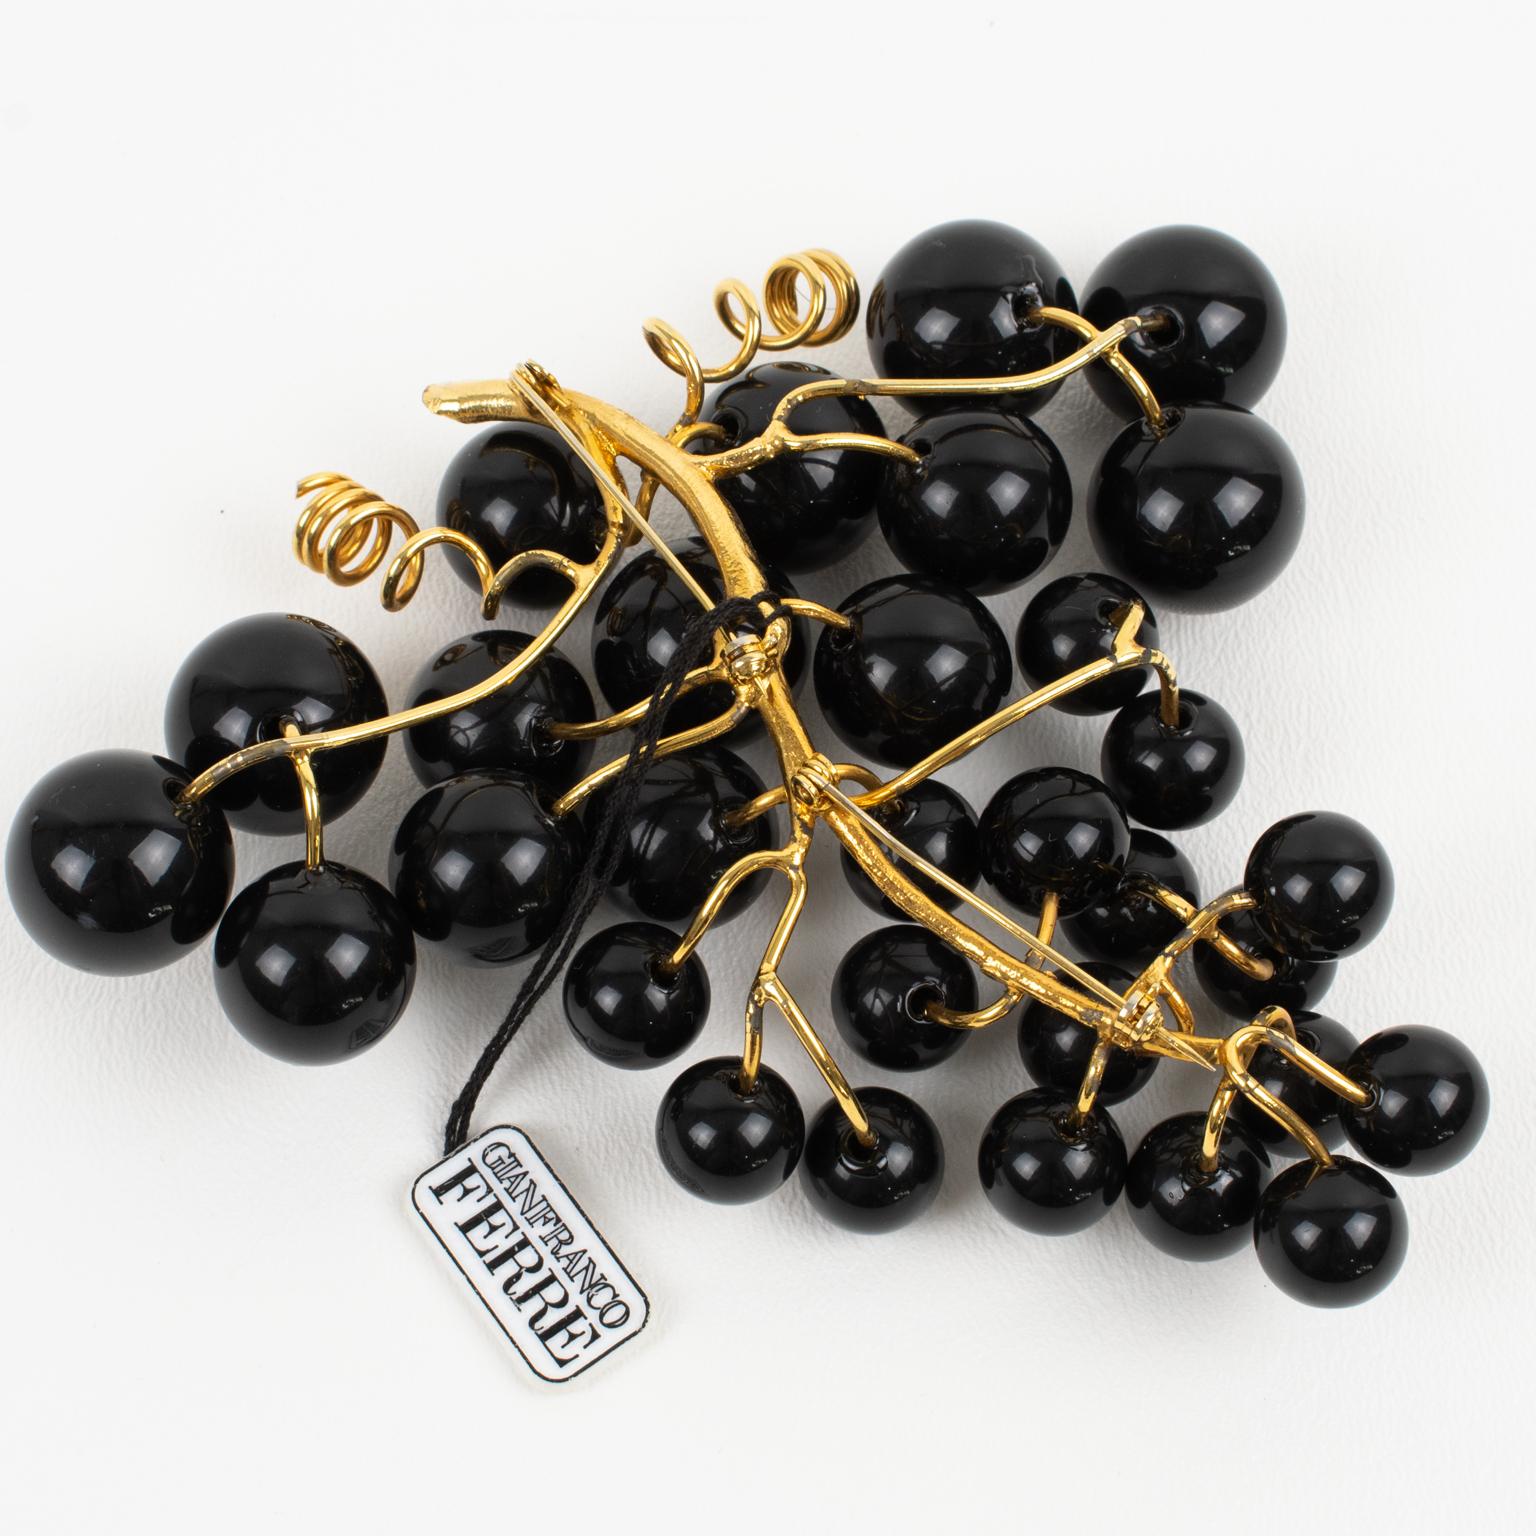 Gianfranco Ferre Massive Sculptural Pin Brooch Black Resin Grapes In Good Condition For Sale In Atlanta, GA